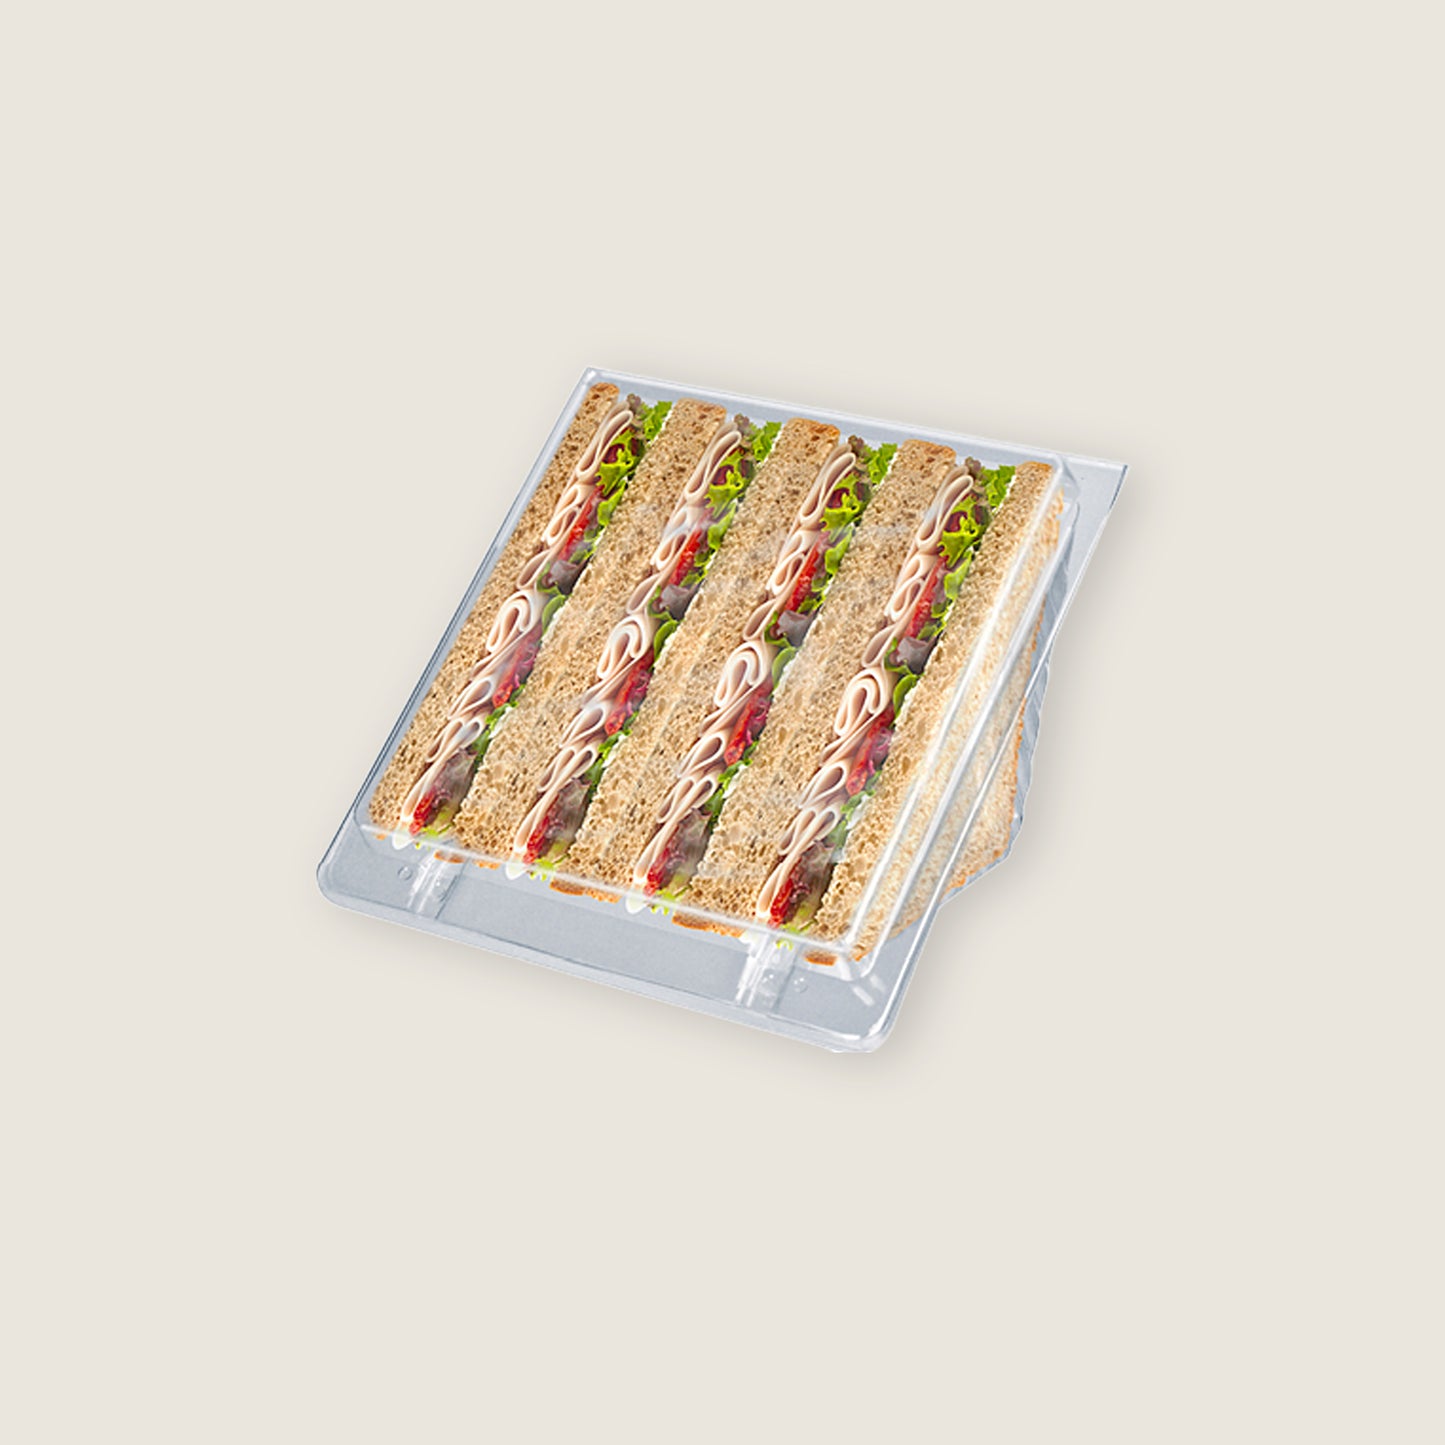 Sandwich Wedges